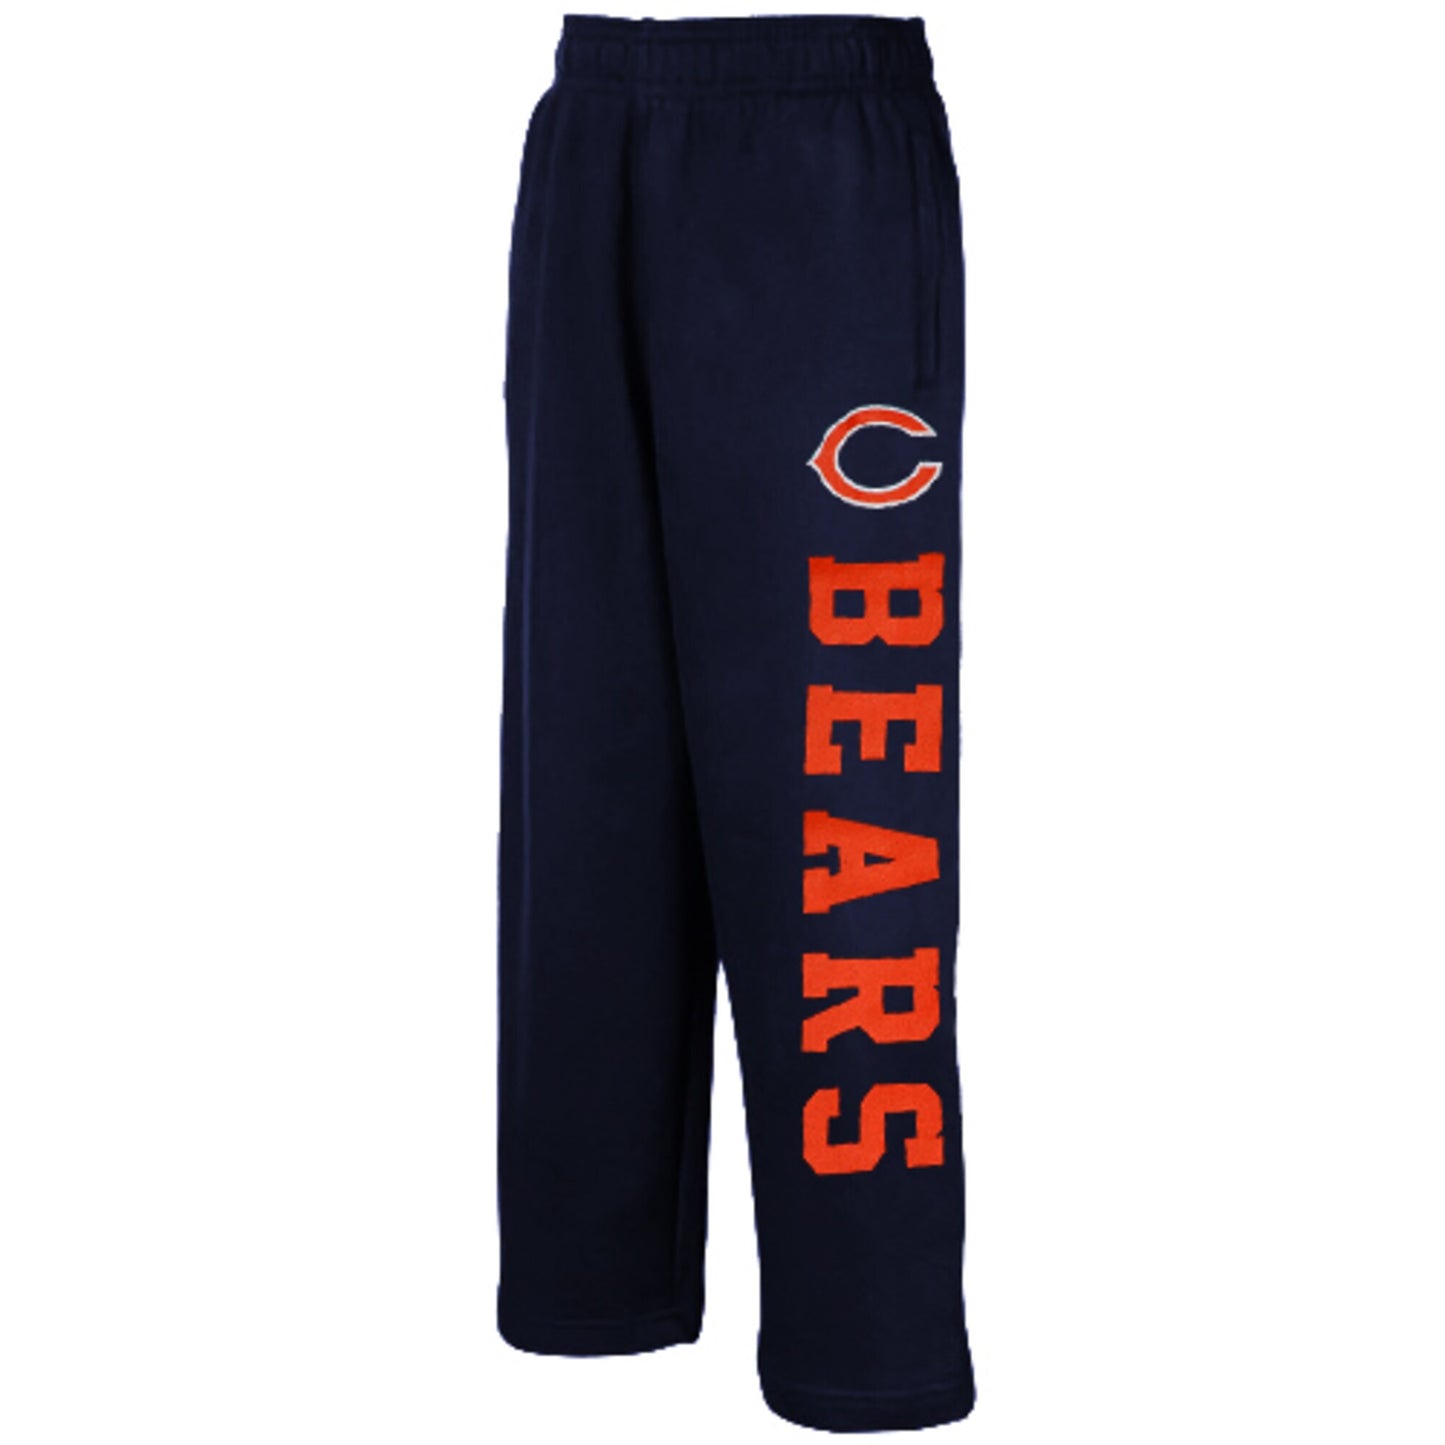 Chicago Bears Youth Fleece Pants - Navy Blue